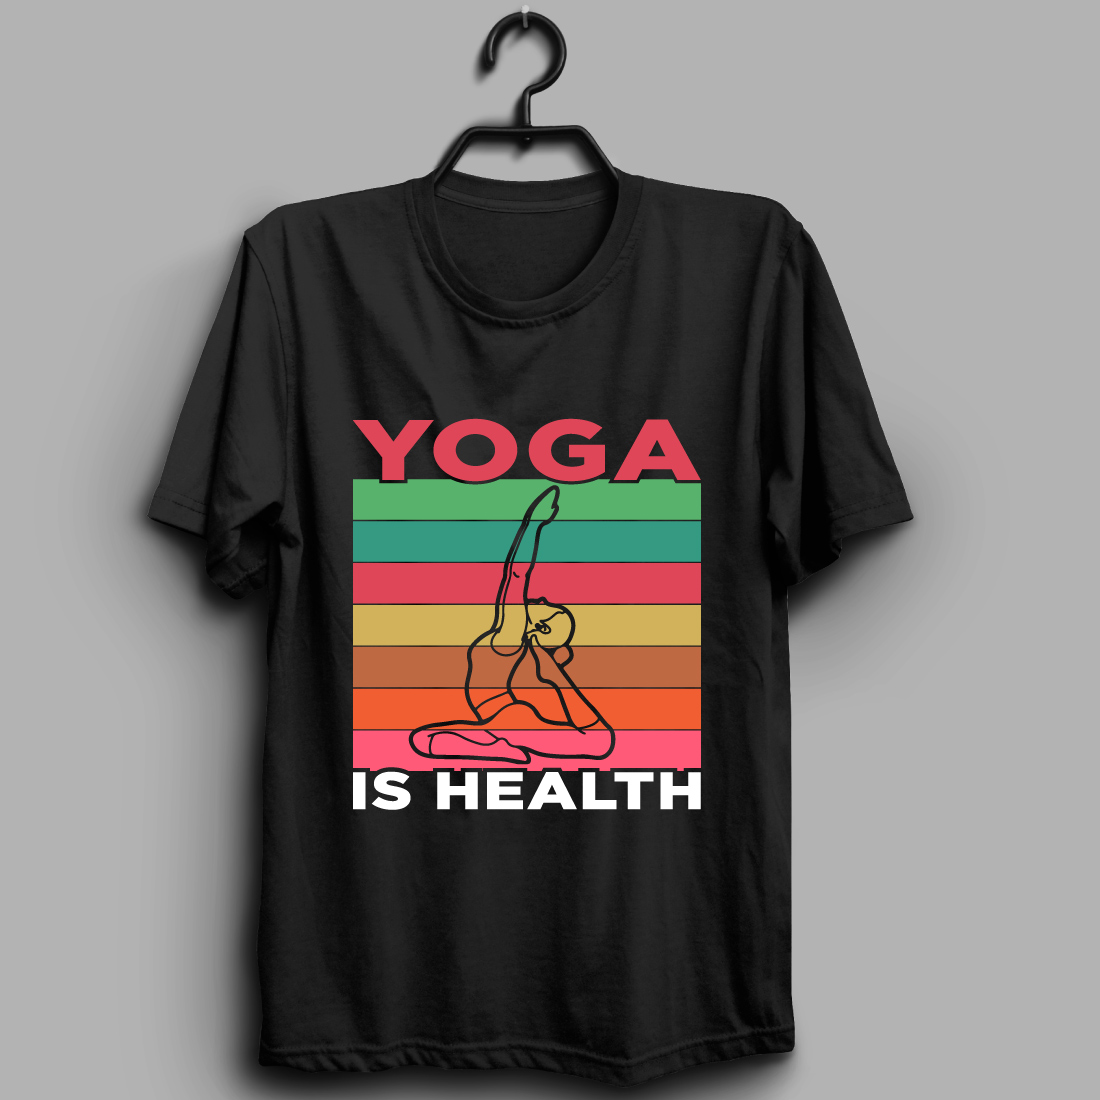 yoga t shirt design 1 535